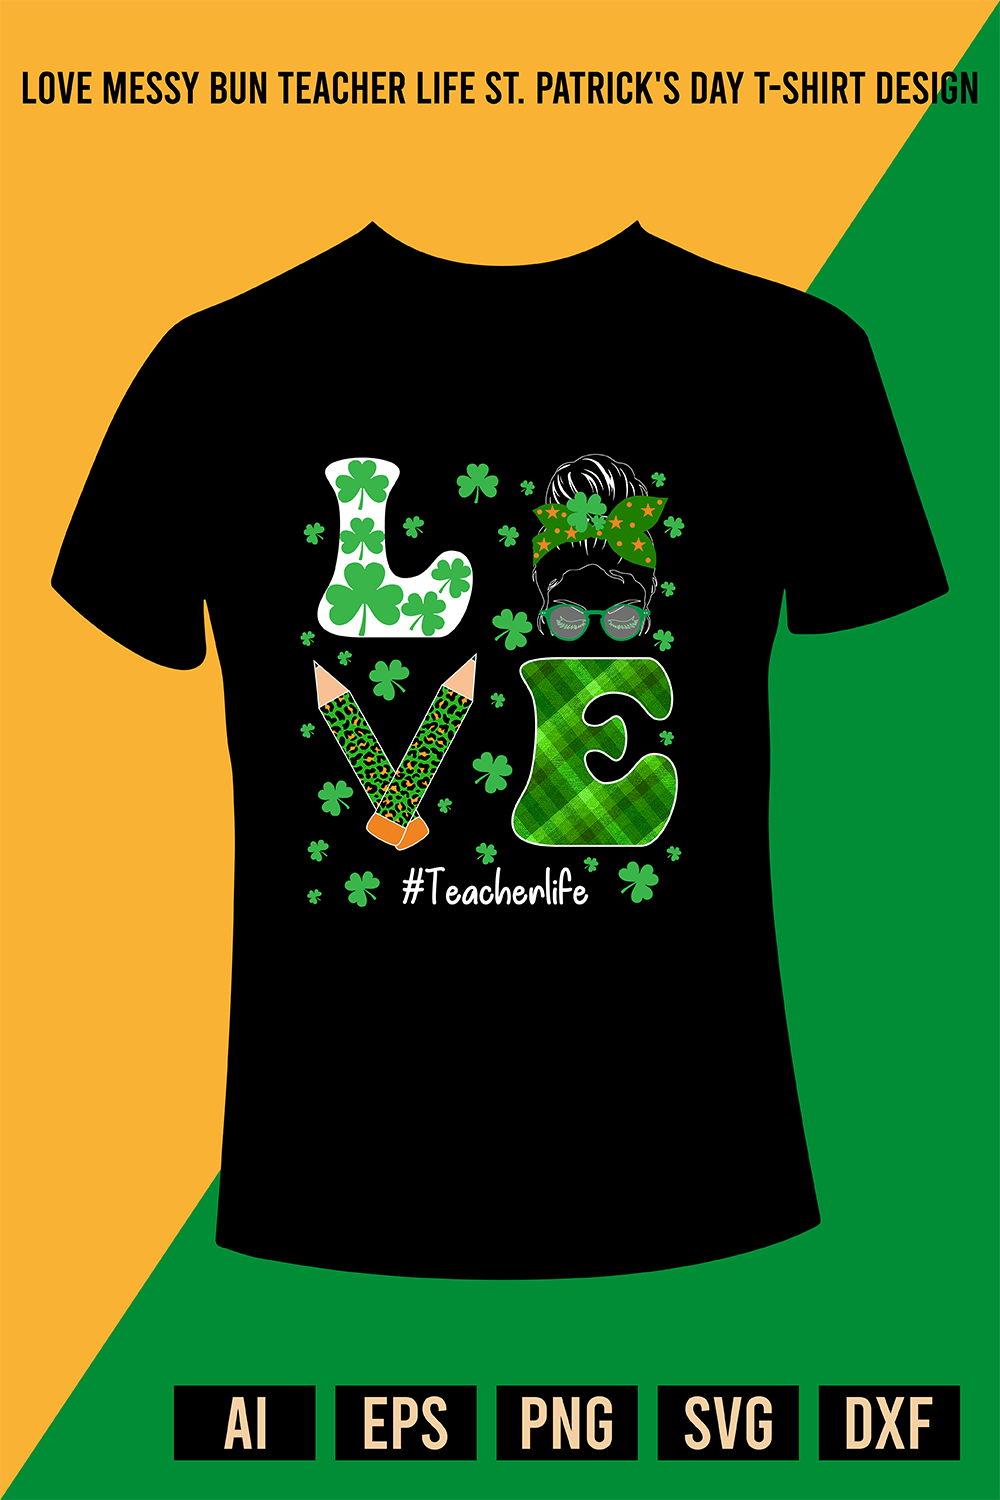 Love Messy Bun Teacher Life St Patrick's Day T-Shirt Design pinterest preview image.